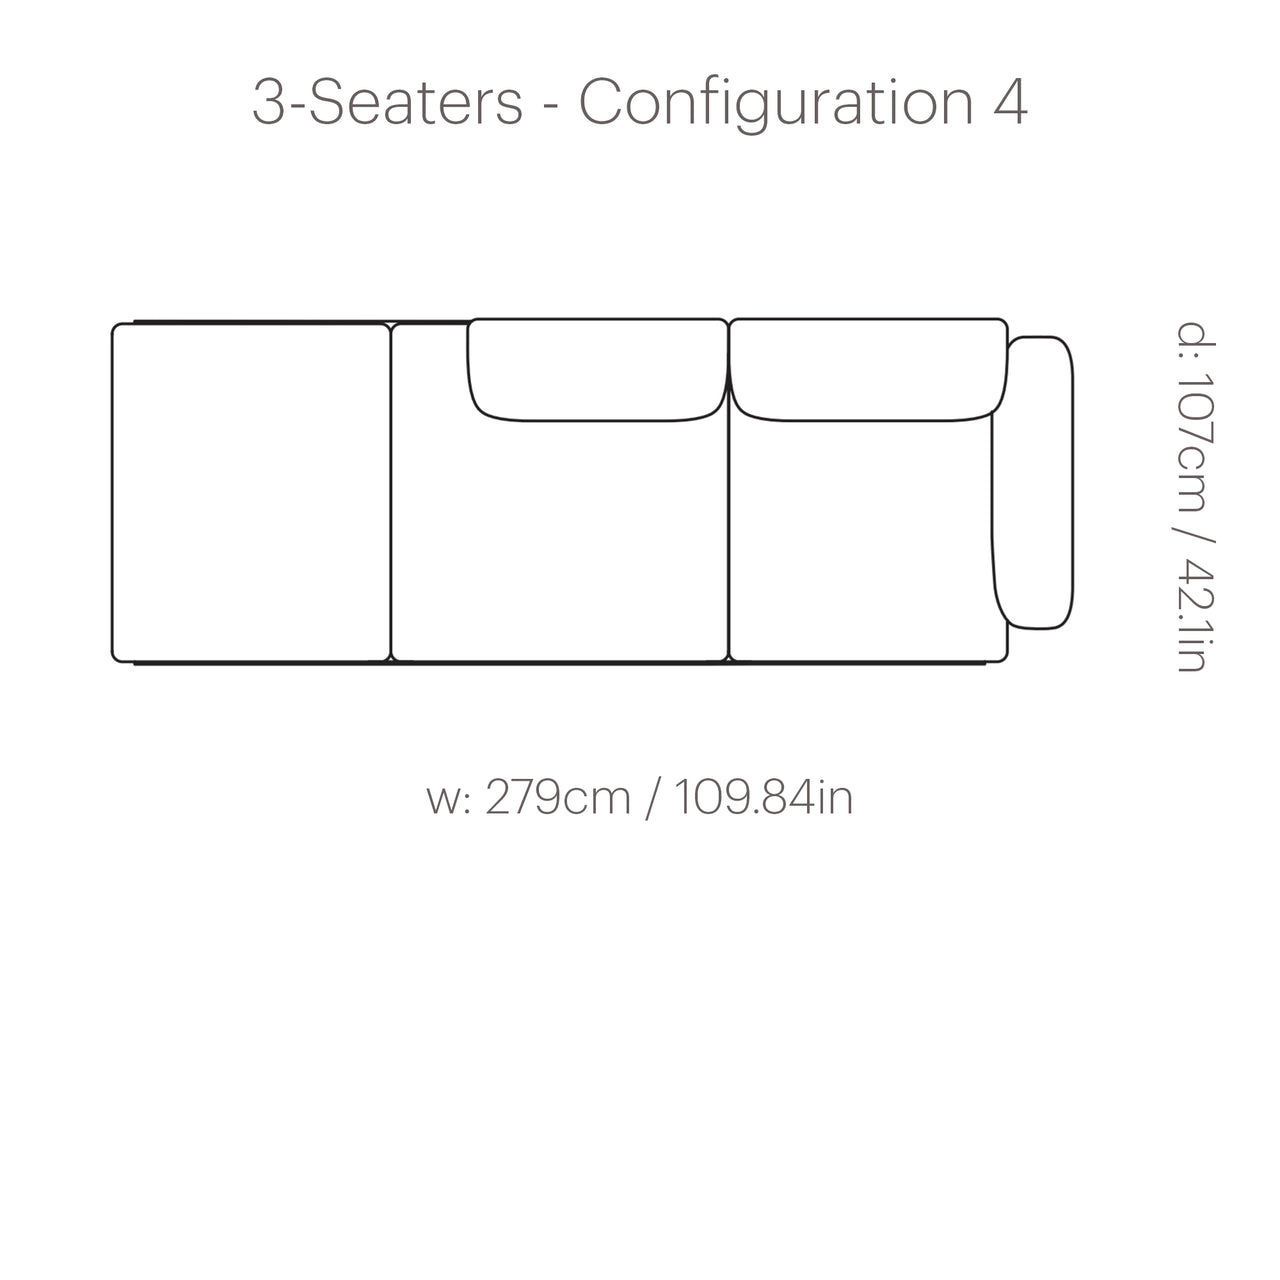 In Situ Modular Sofa: 3 Seater + Configuration 4